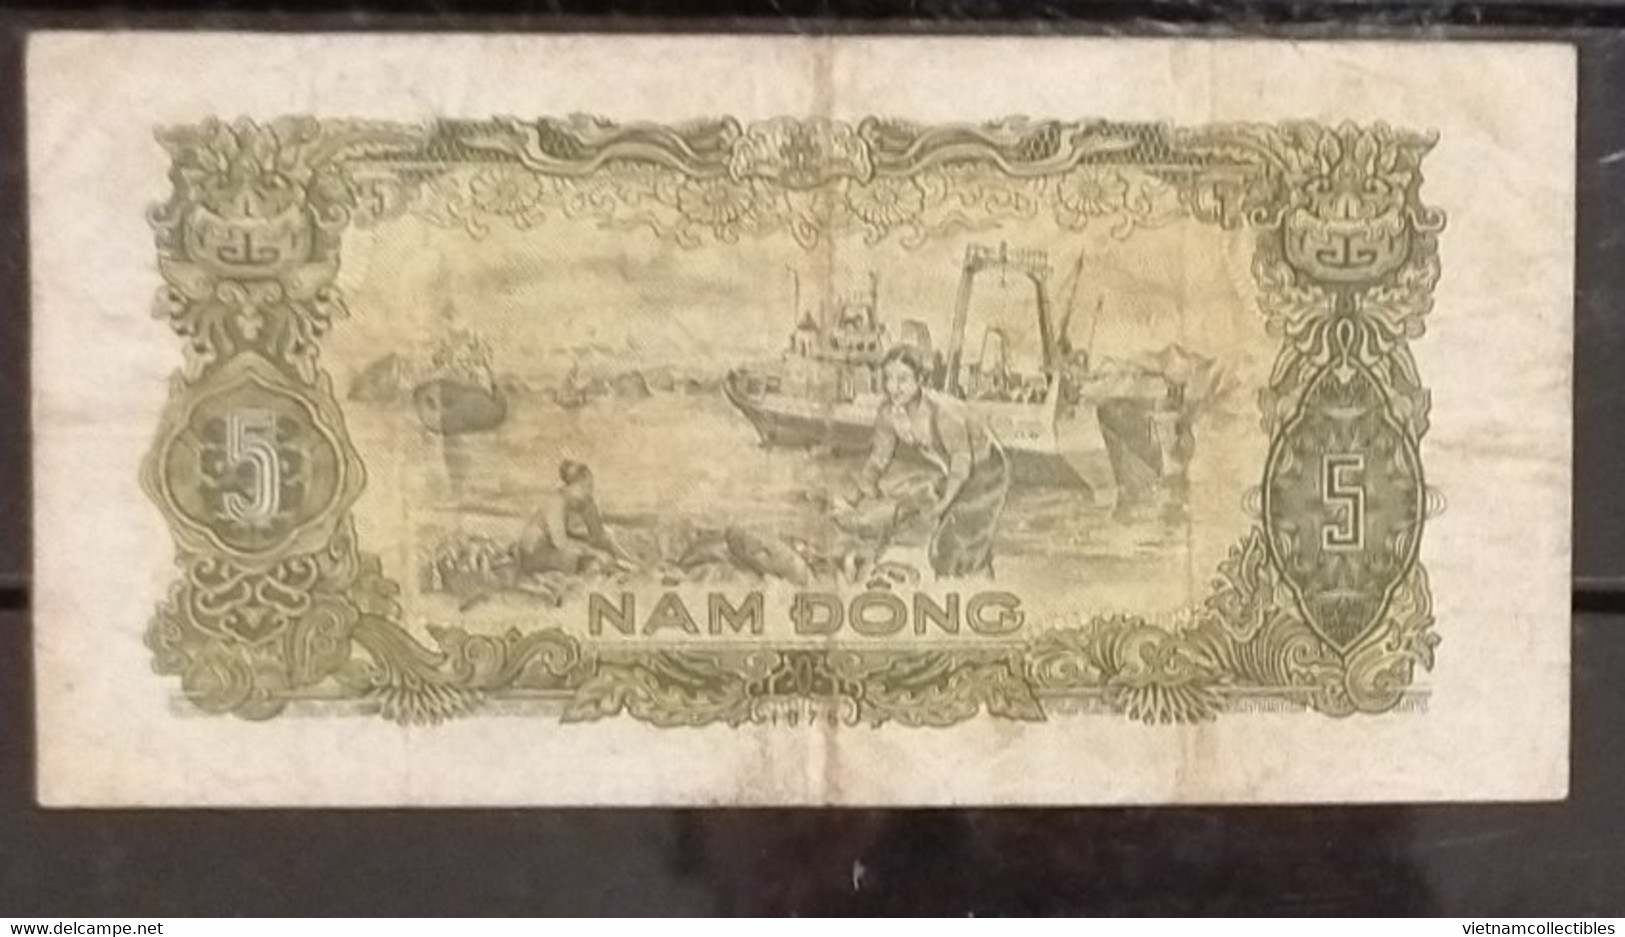 Vietnam Viet Nam 5 Dong VF Banknote Note / Billet 1976 -Pick # 81b / 02 Photos - Viêt-Nam